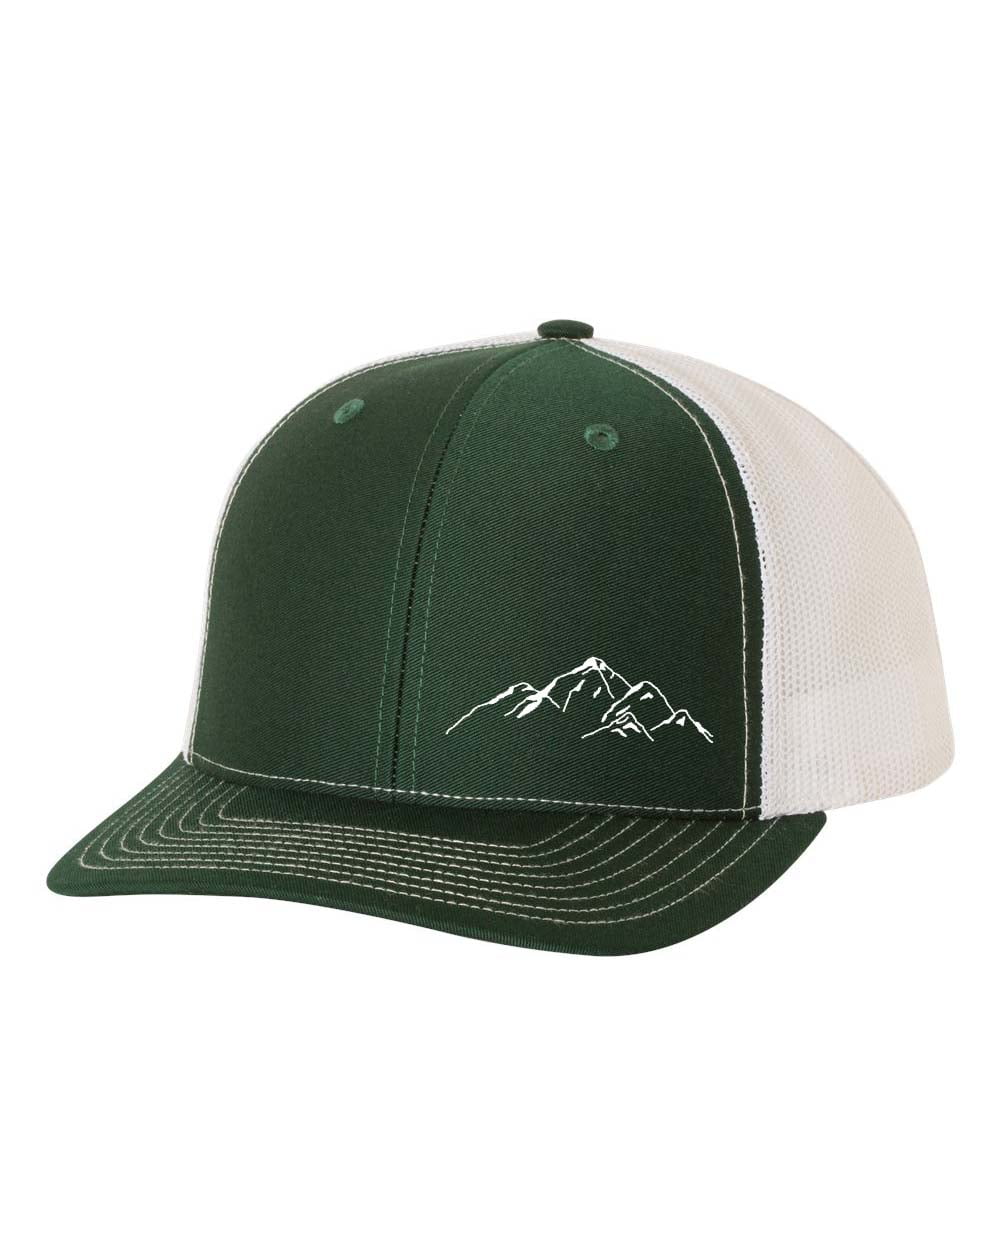 Rock Climbing Carabiner Mesh Back Trucker Hat Mountain Outdoors Style for  Men or Women Rock Climber Hat 